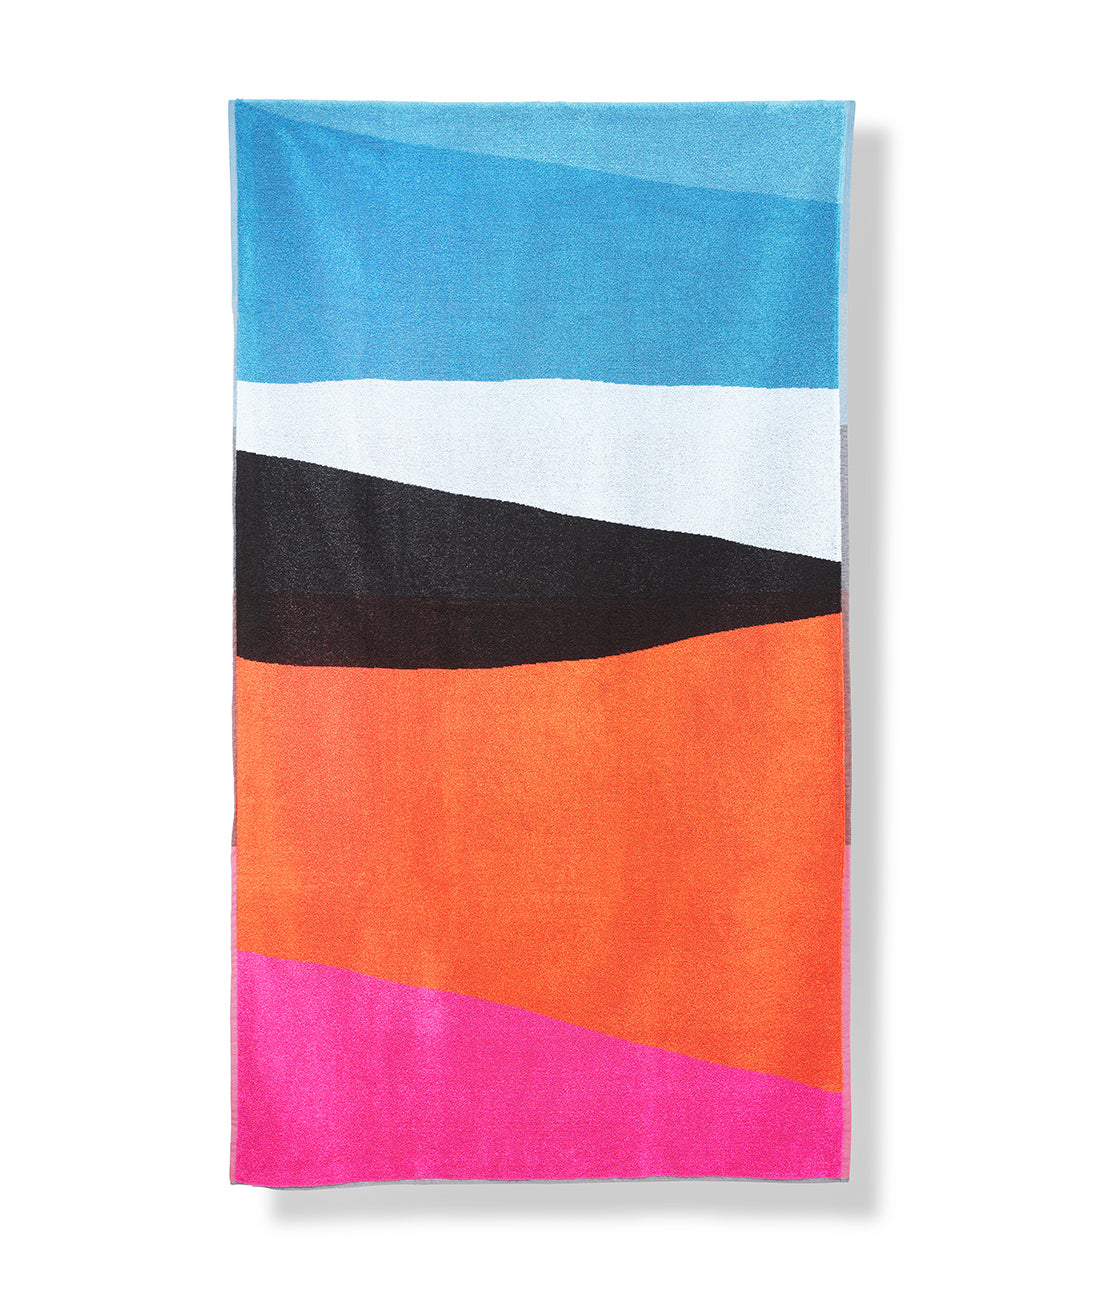 Terry Beach Towel "Sabbie" by Mara Tschudi 01